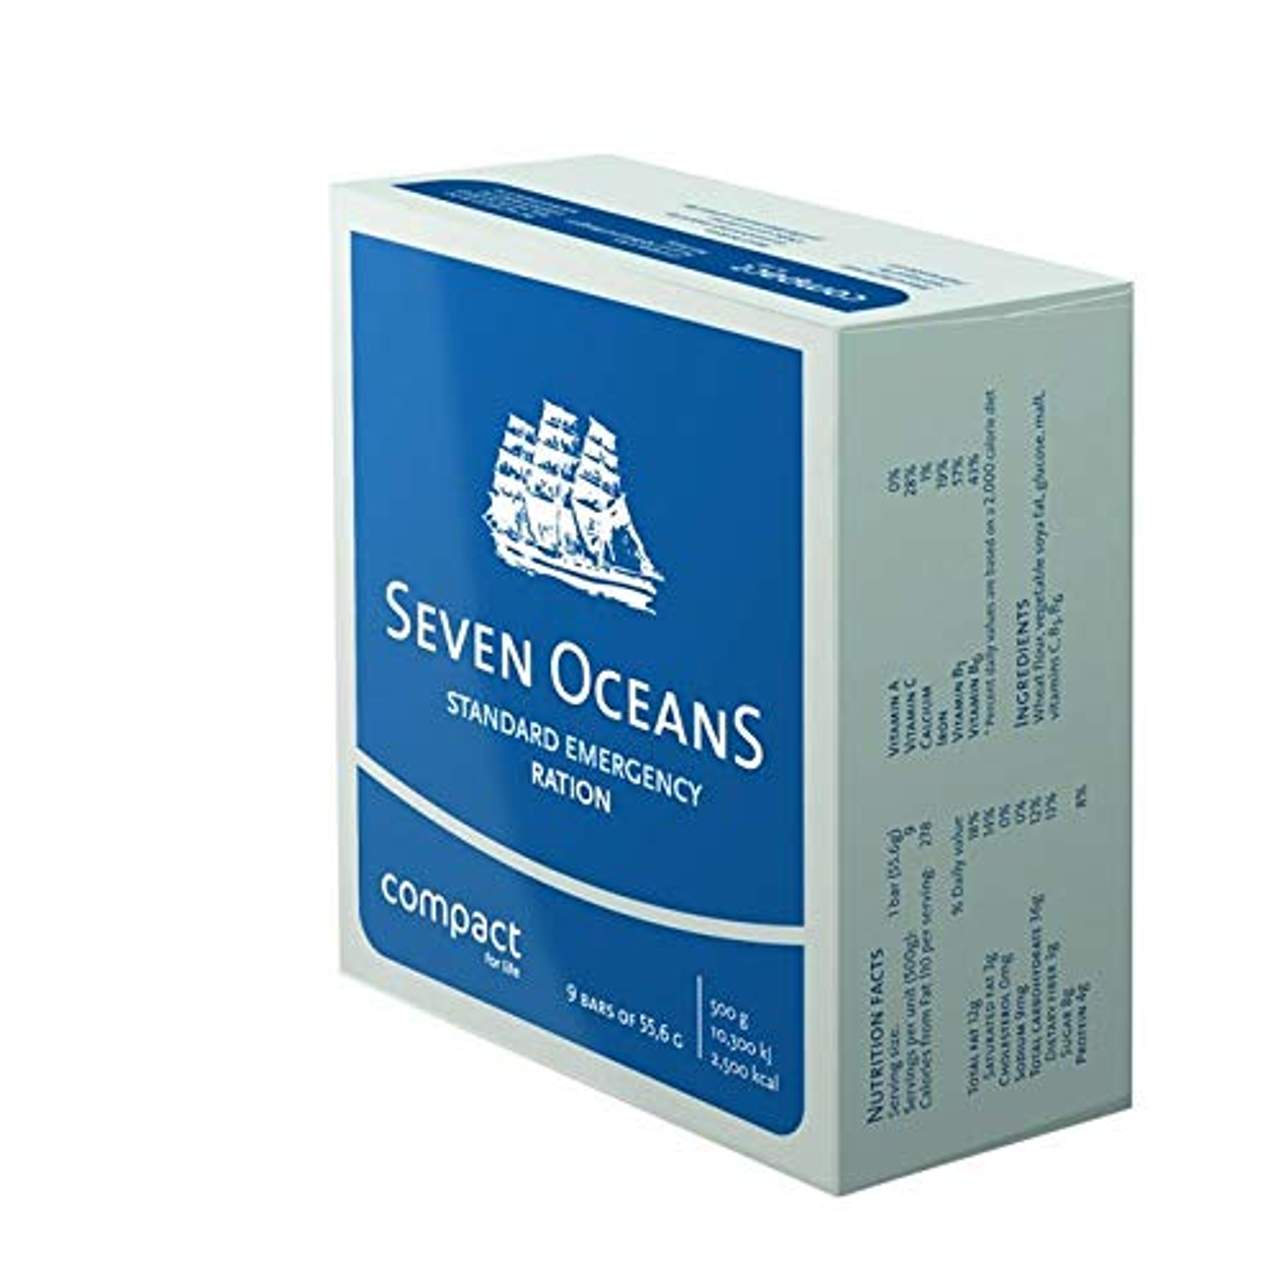 Seven Oceans Notration in Karton 24 x 500g